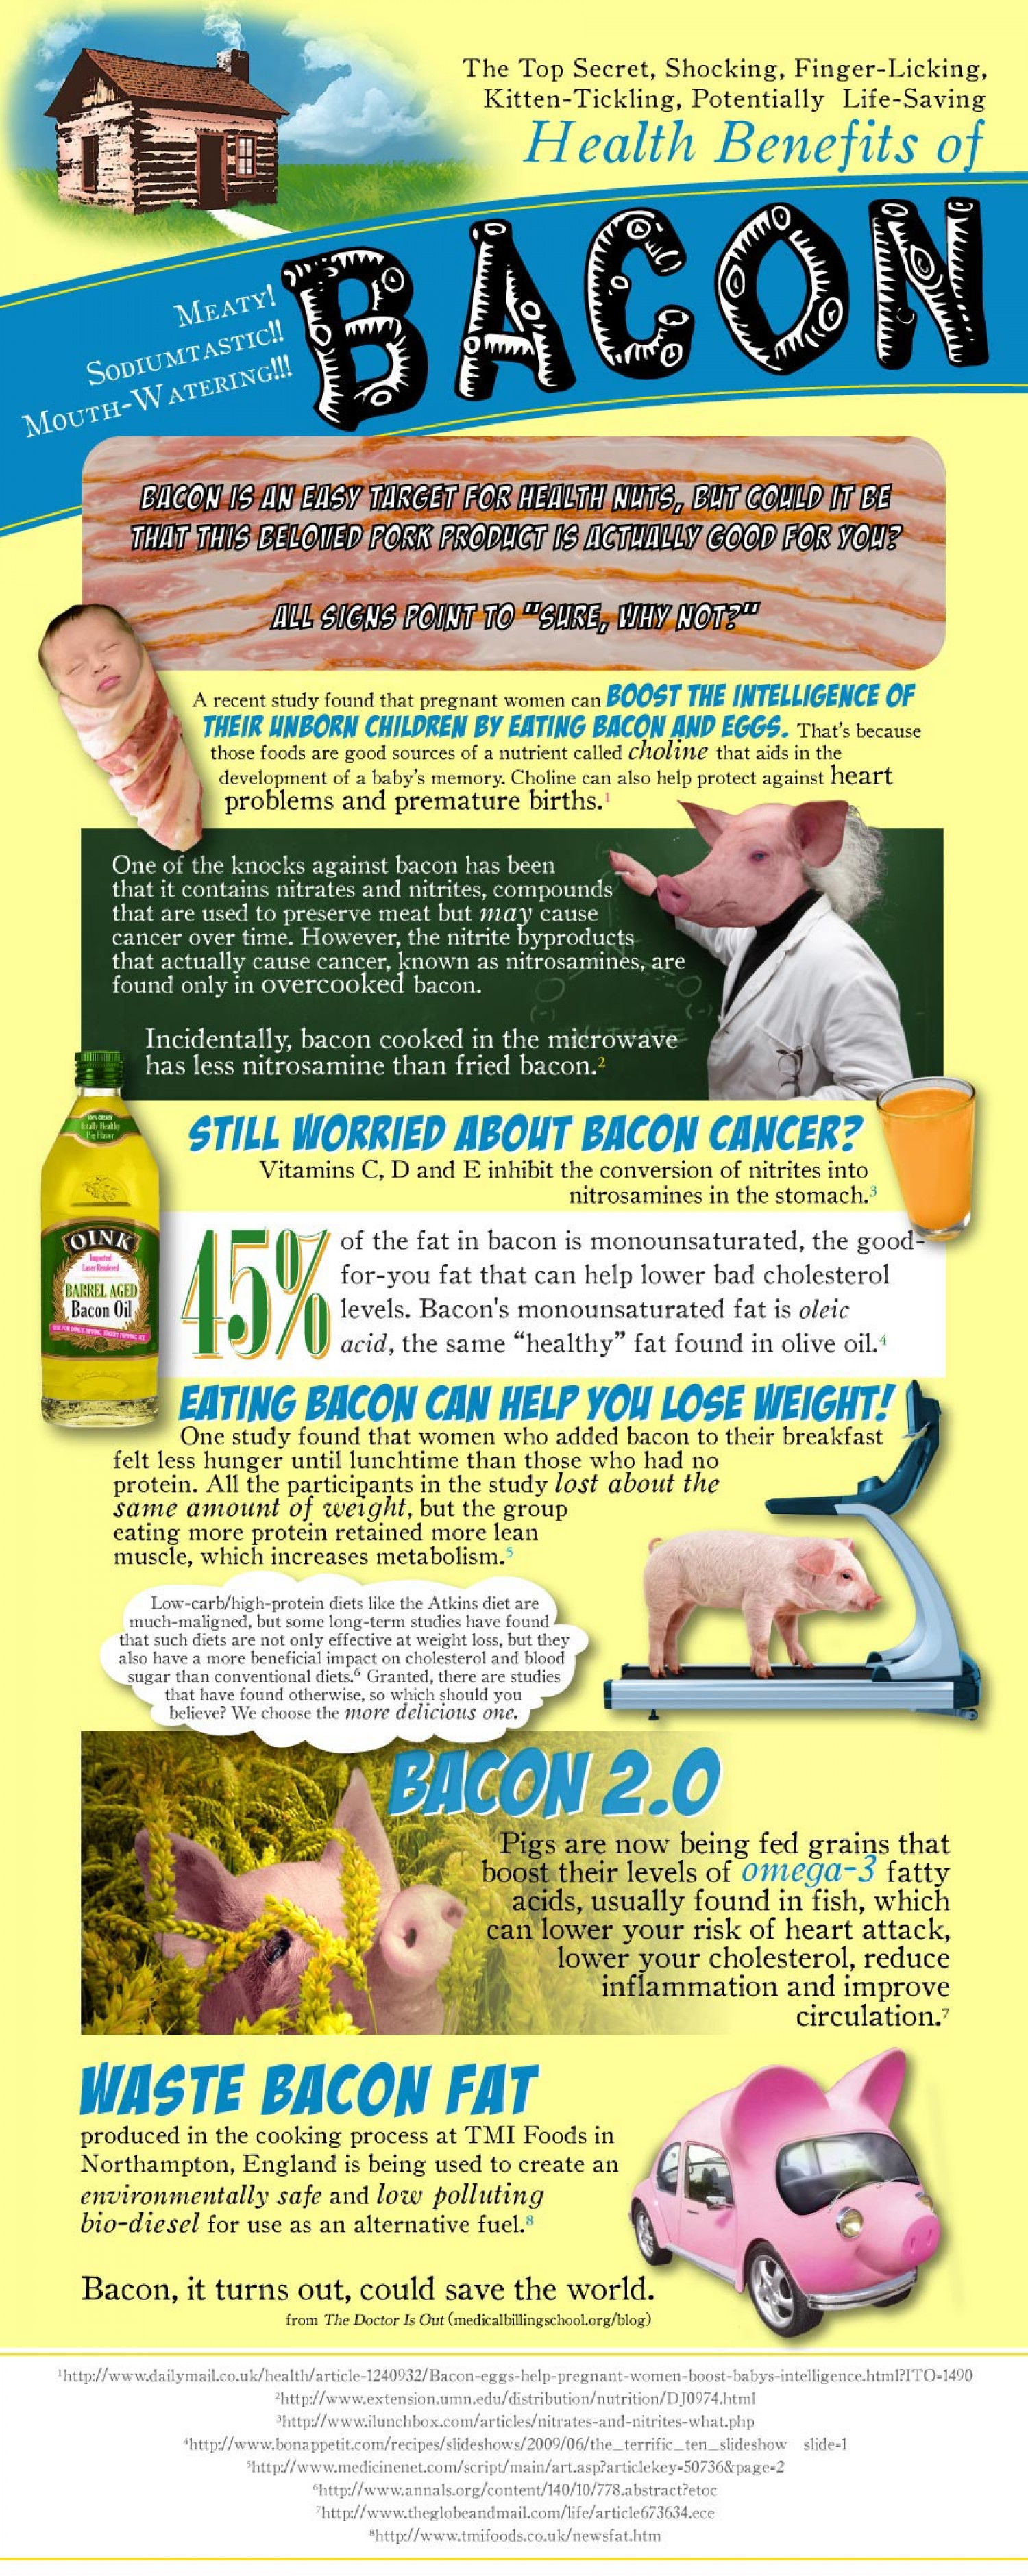 Health Benefits of Bacon